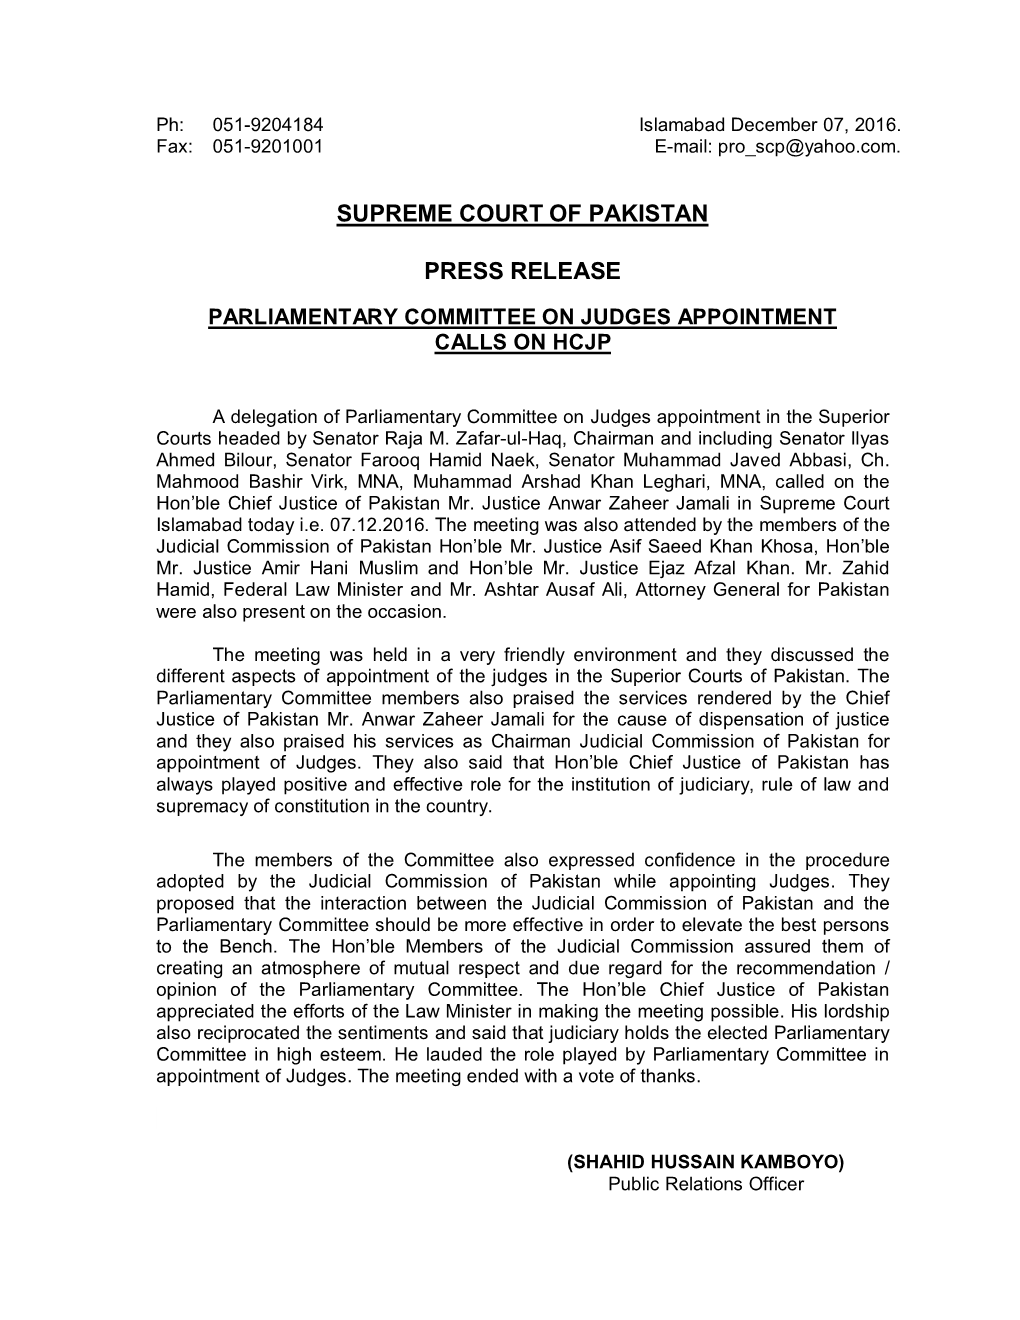 Supreme Court of Pakistan Press Release